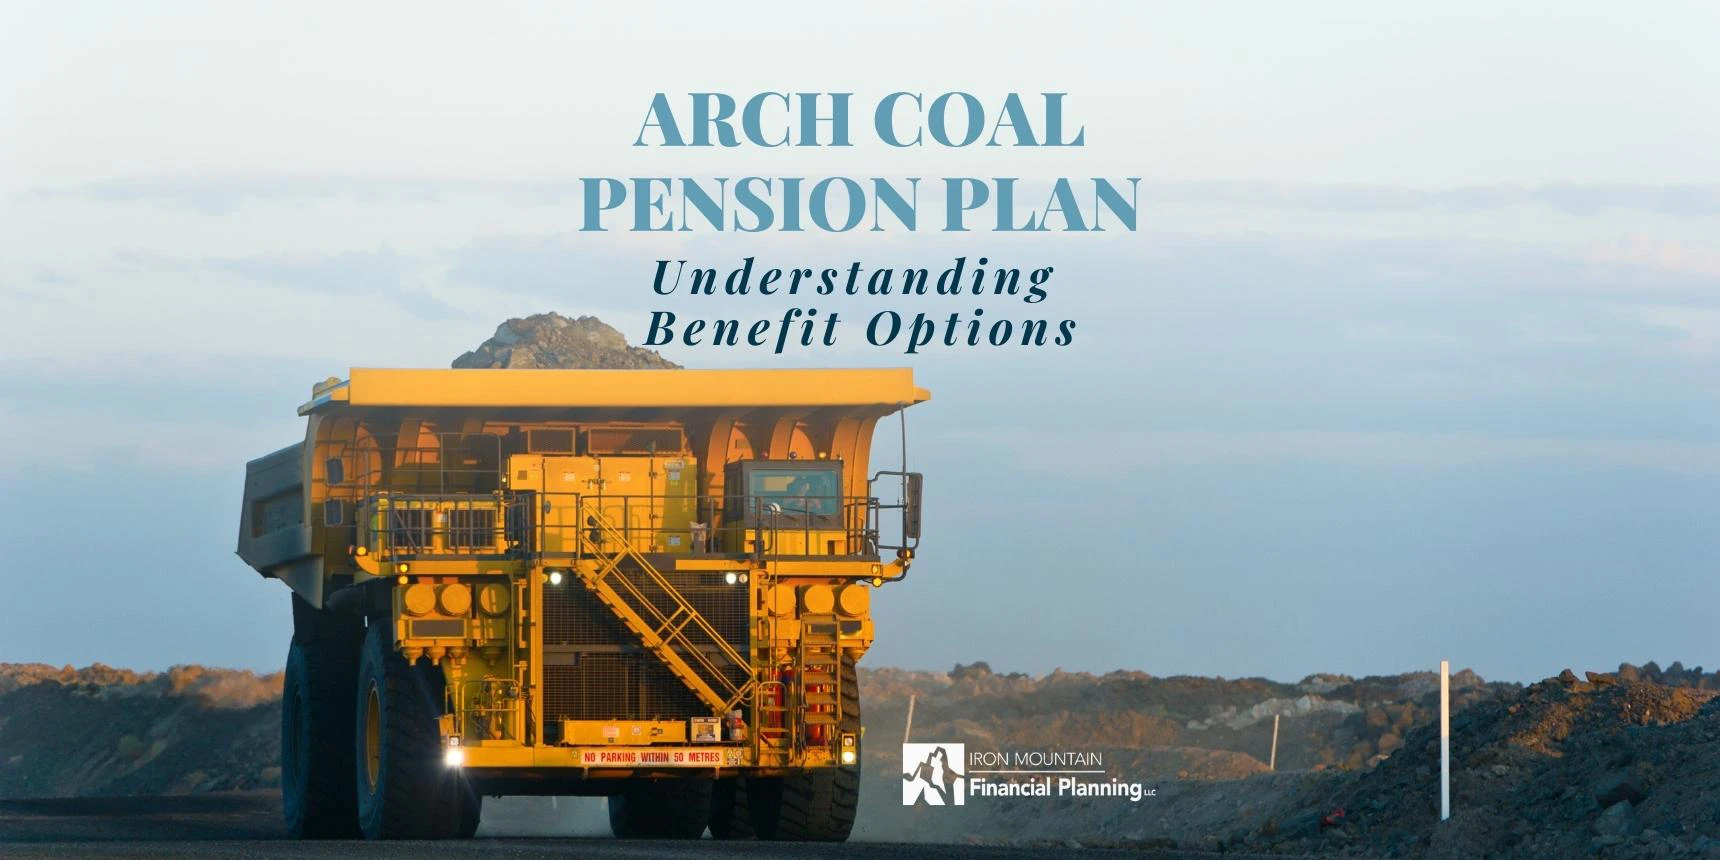 Understanding Arch Coal's Pension Plan